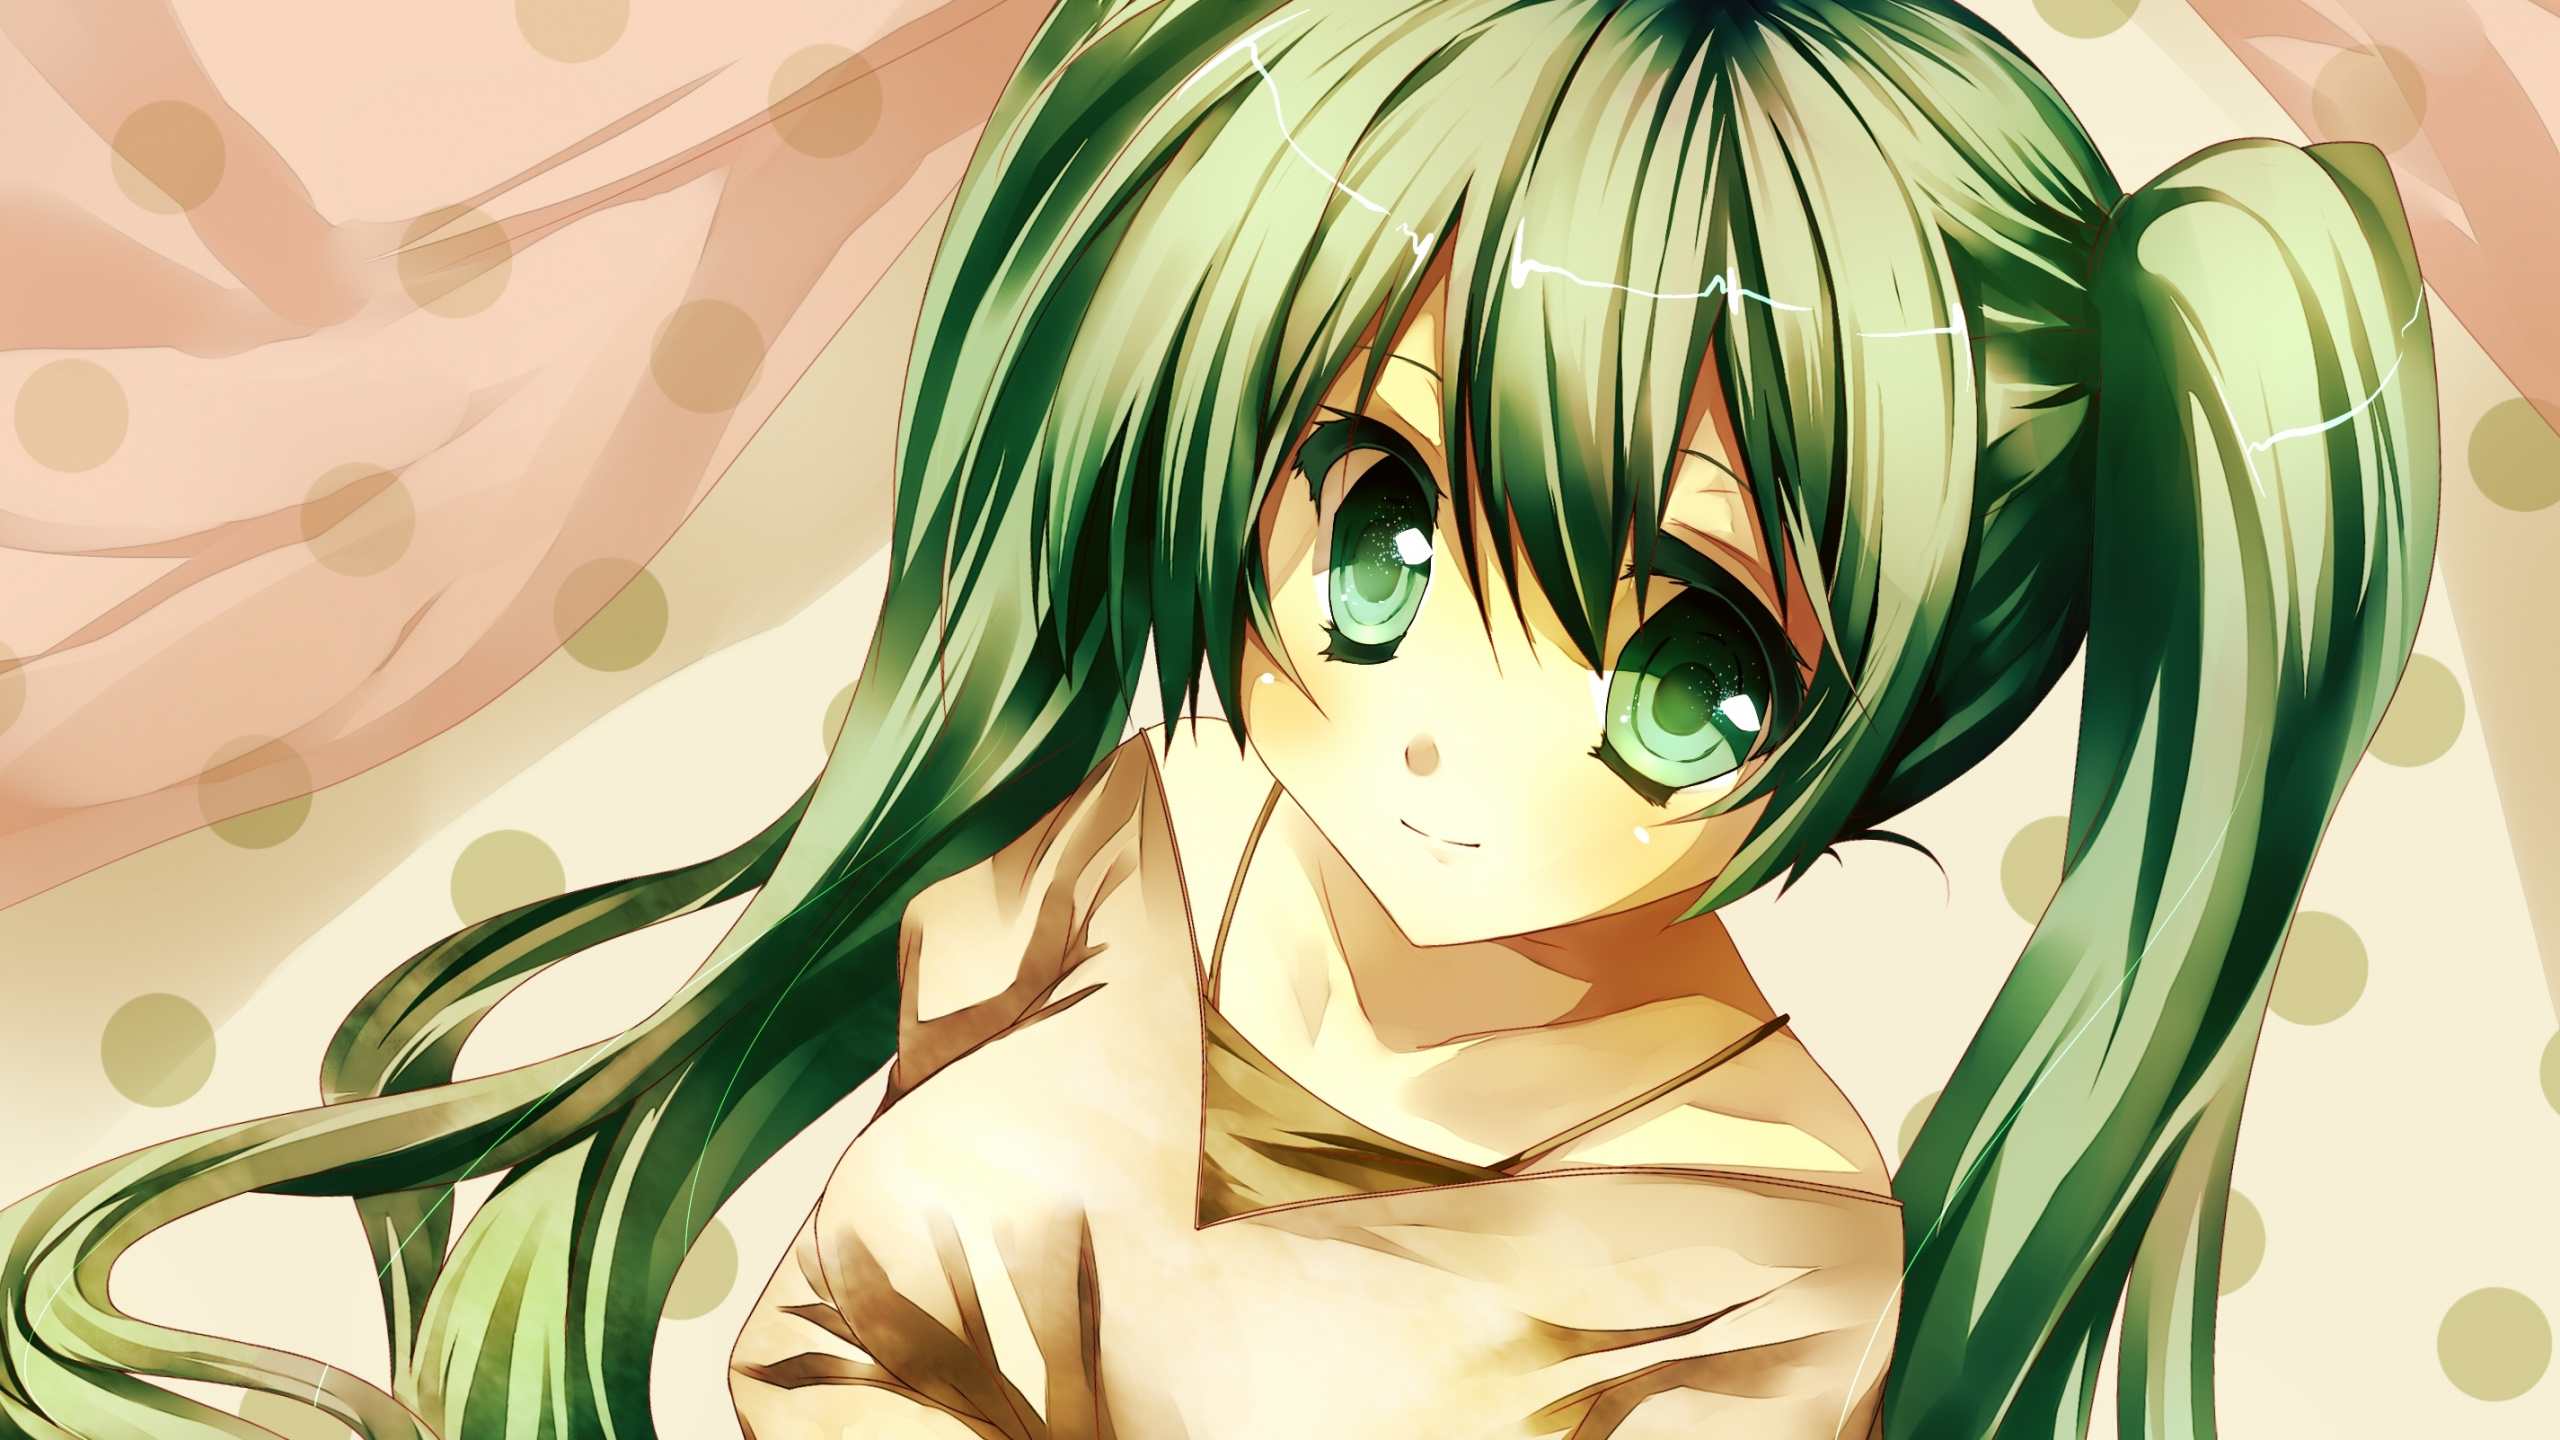 Personaje de Anime Masculino de Pelo Verde. Wallpaper in 2560x1440 Resolution